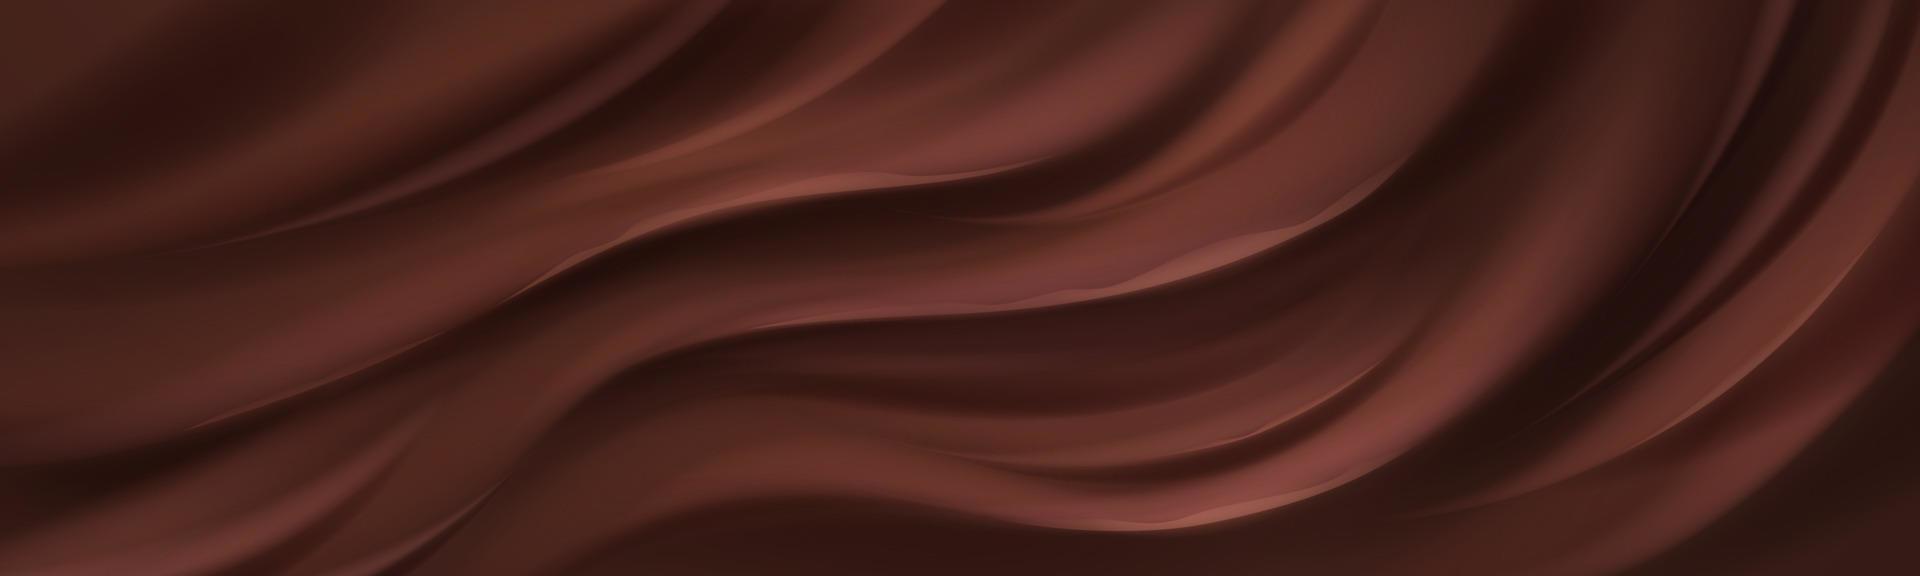 choklad textur bakgrund, mousse krusning vågor vektor